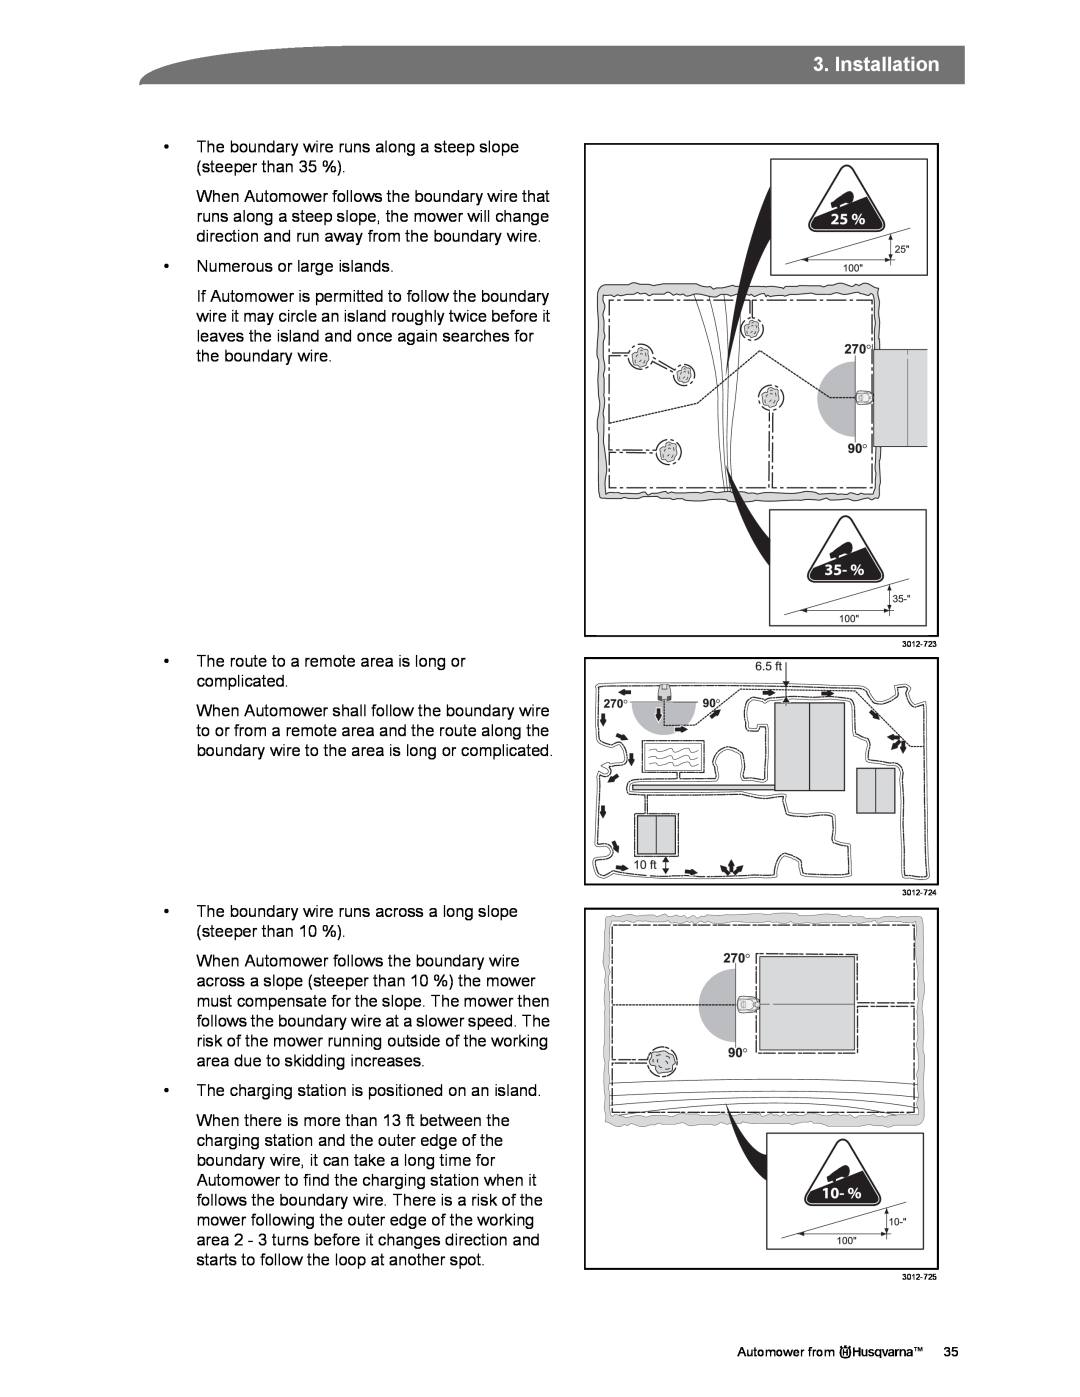 Husqvarna Automower manual Installation, •Numerous or large islands 